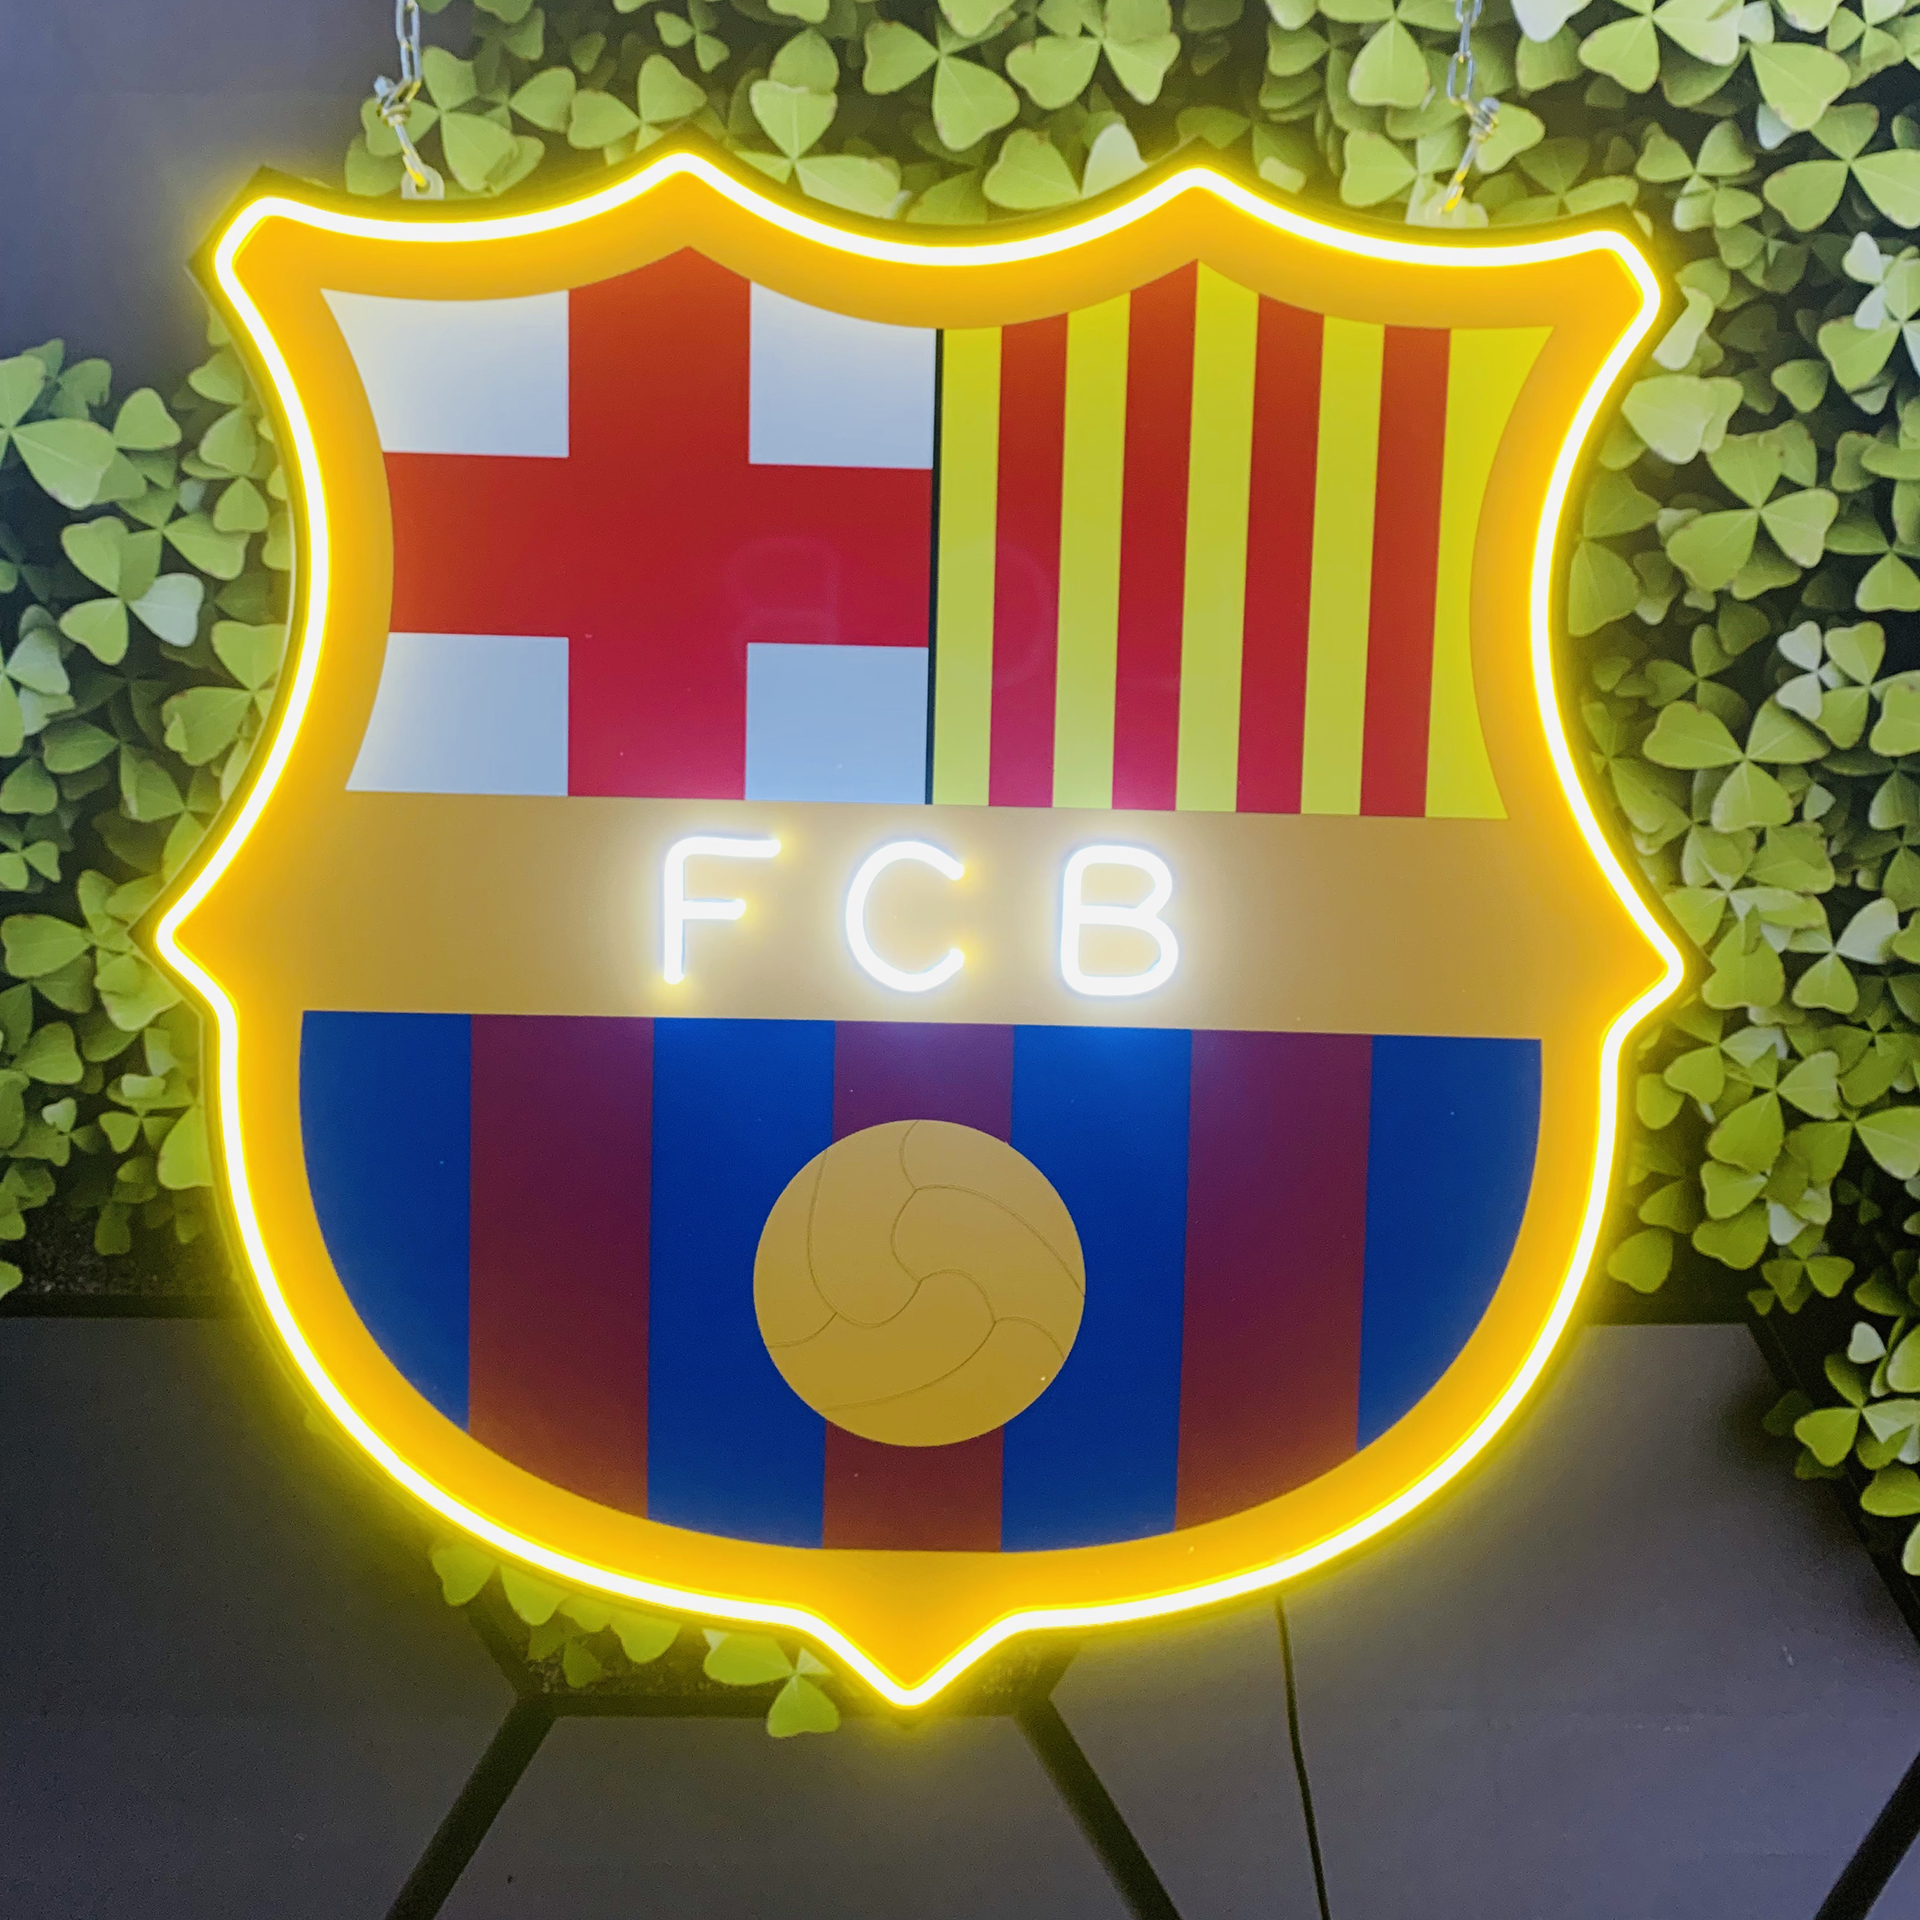 Barcelona FCB Logo Neon-Like LED Sign